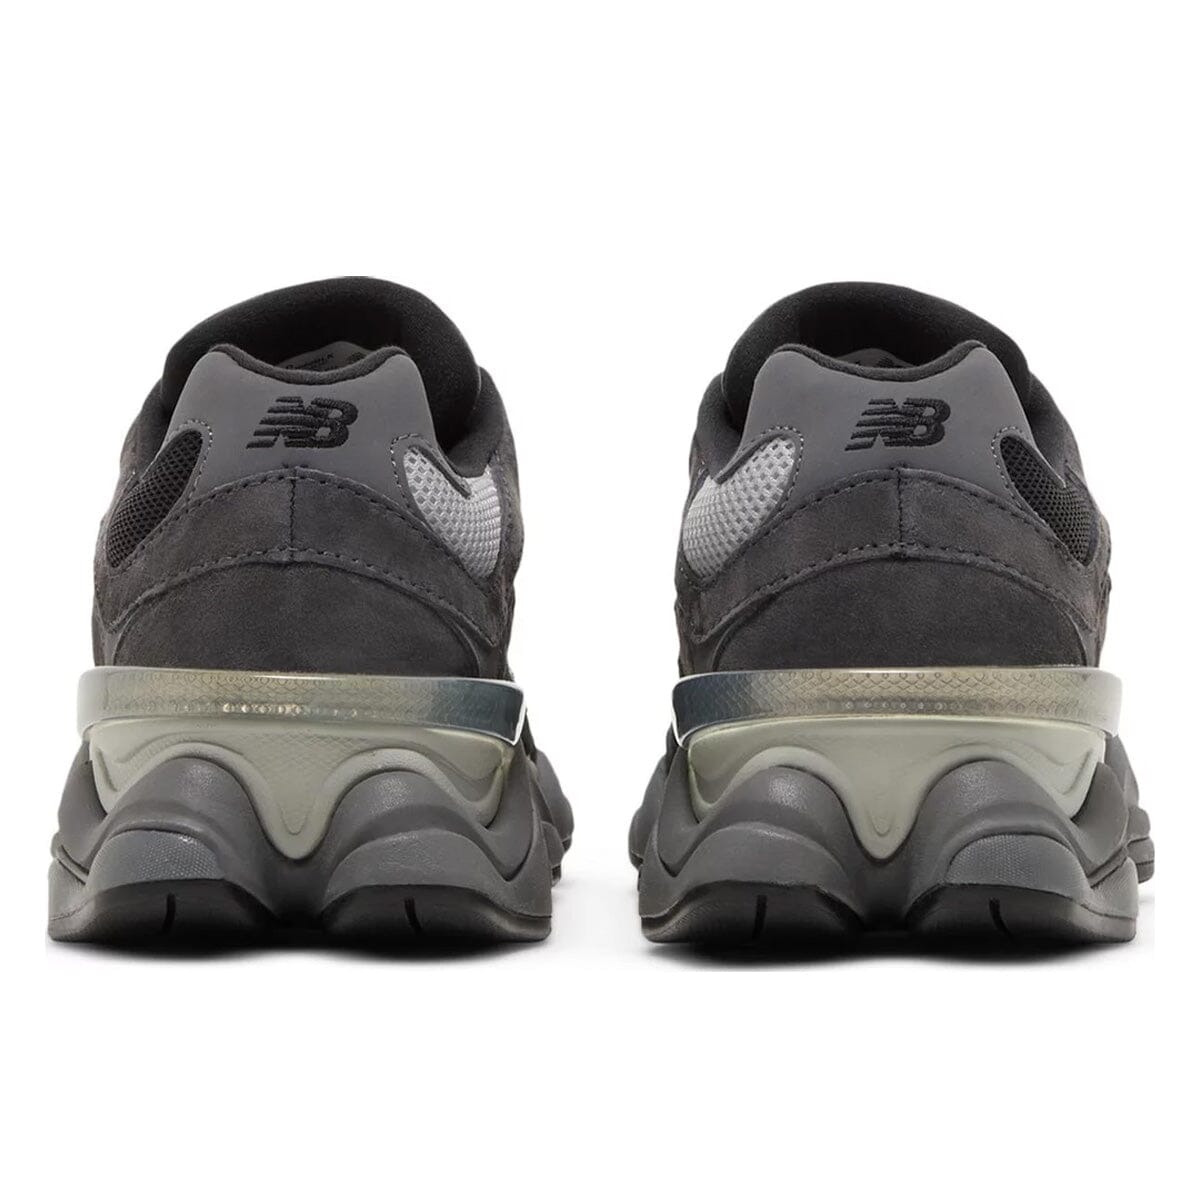 New Balance 9060 Black Castlerock Grey New Balance 9060 Blizz Sneakers 